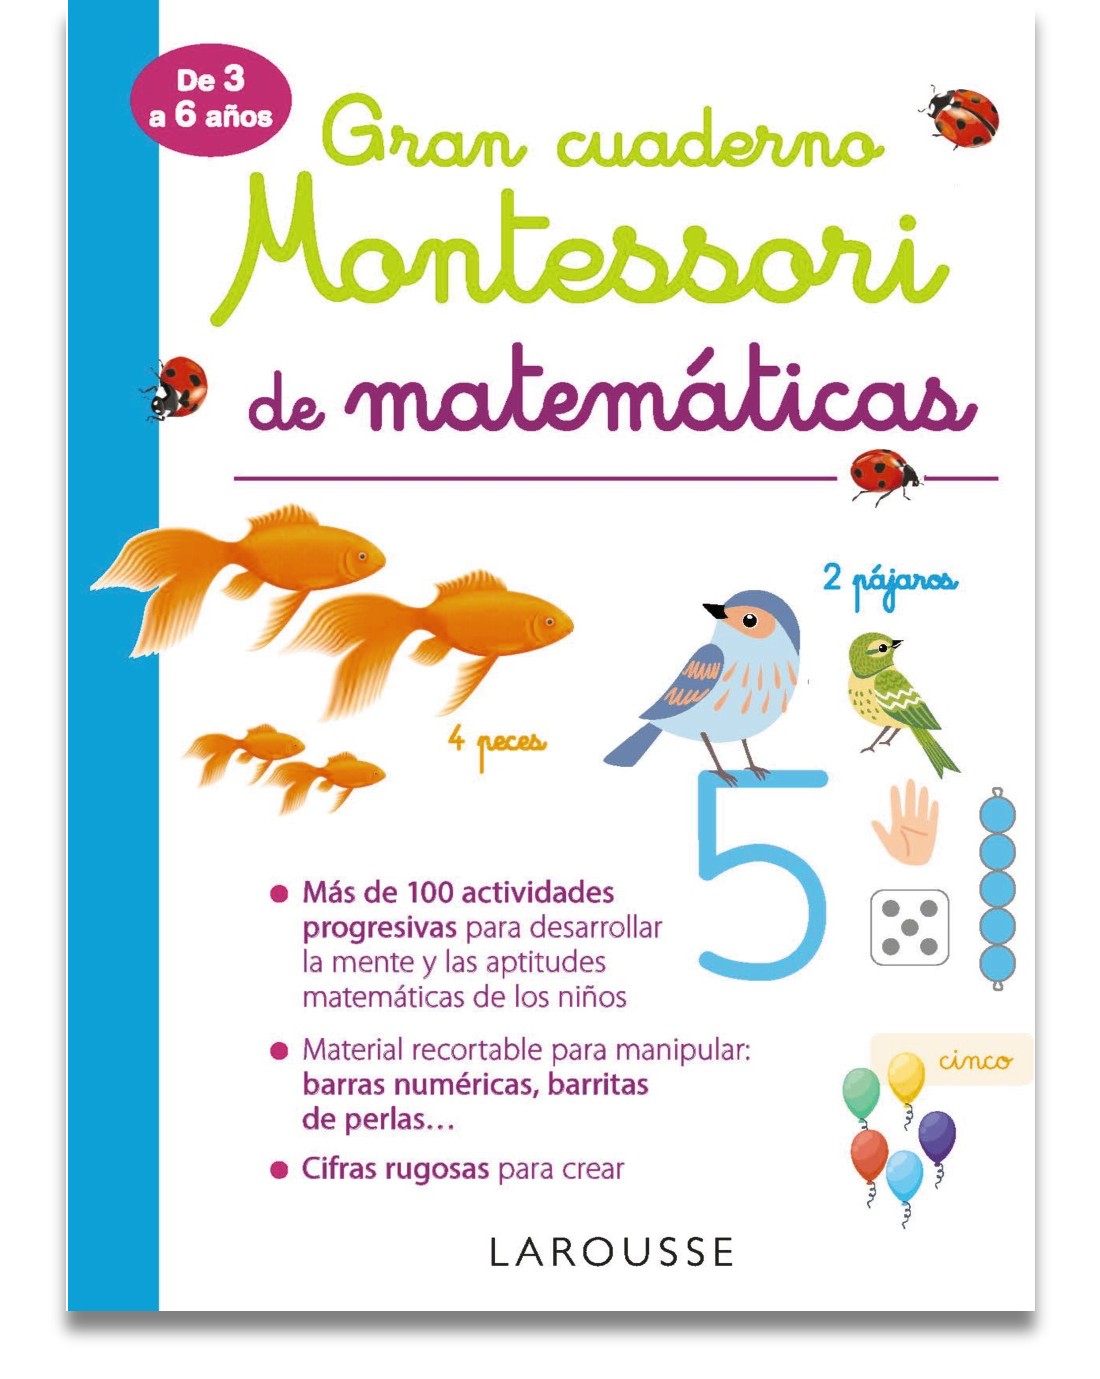 Gran cuaderno Montessori de matemáticas